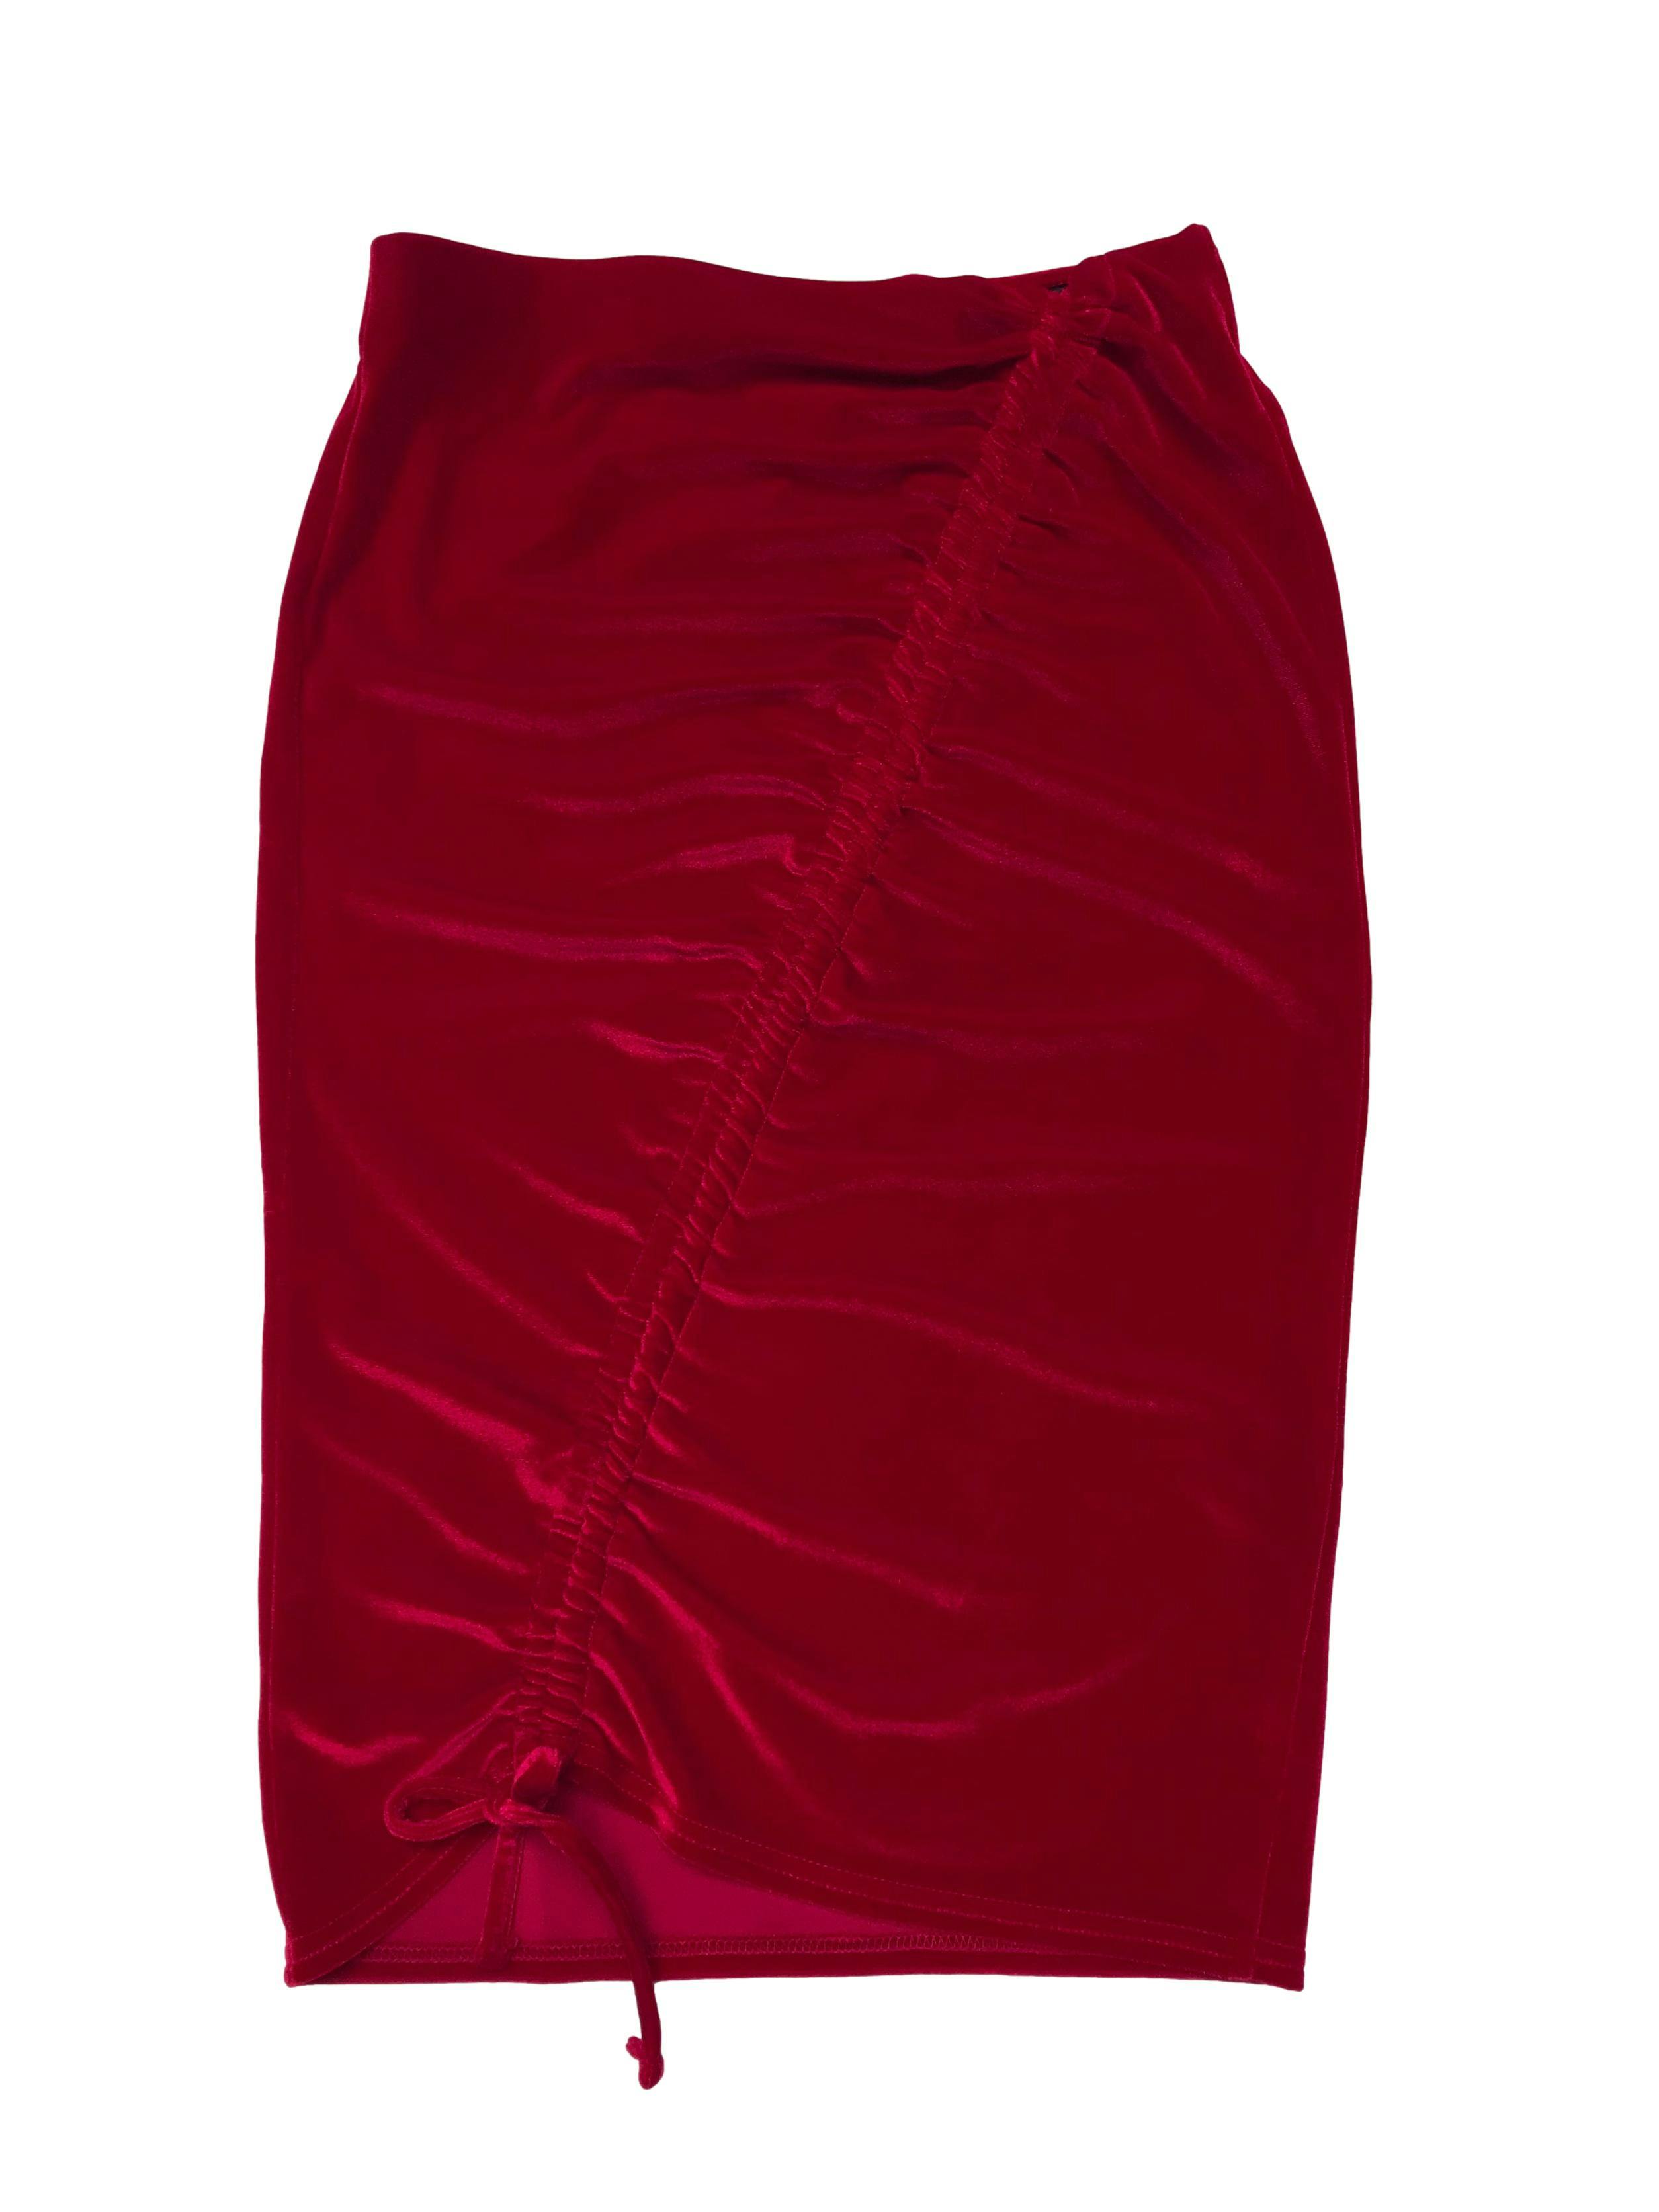 Falda midi Miss Selfridge de terciopelo rojo con drapeado diagonal con largo regulable. Cintura 75cm sin estirar Largo 68cm. Precio original S/ 189